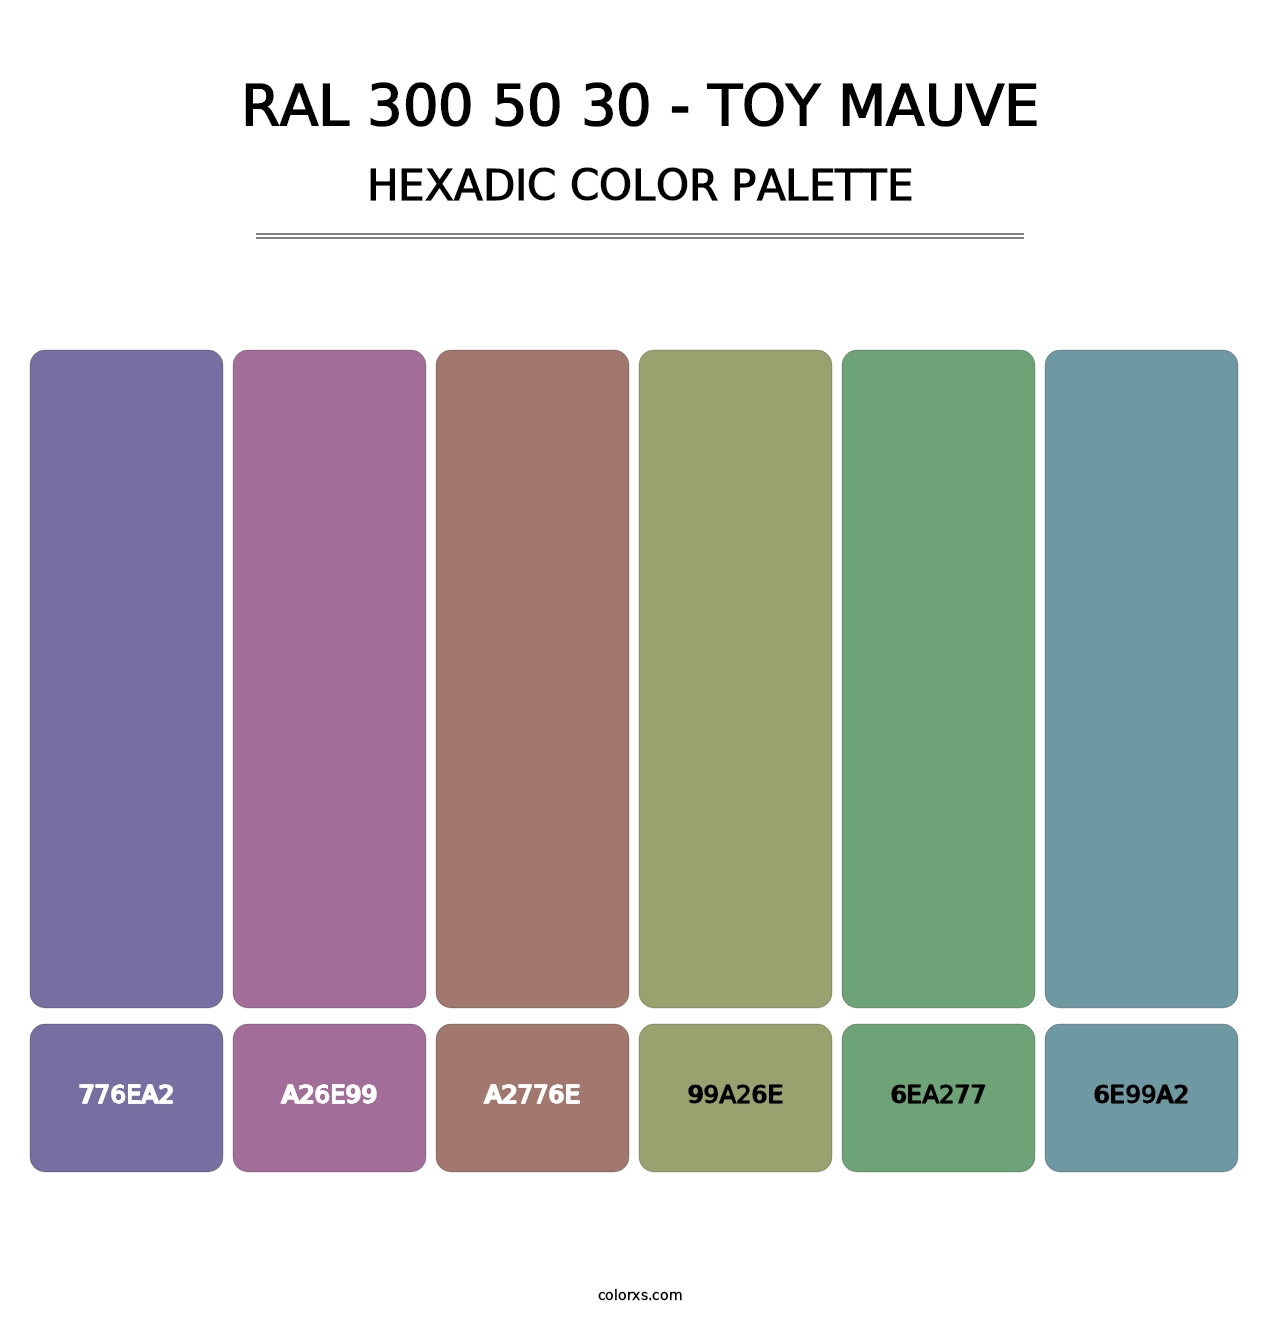 RAL 300 50 30 - Toy Mauve - Hexadic Color Palette